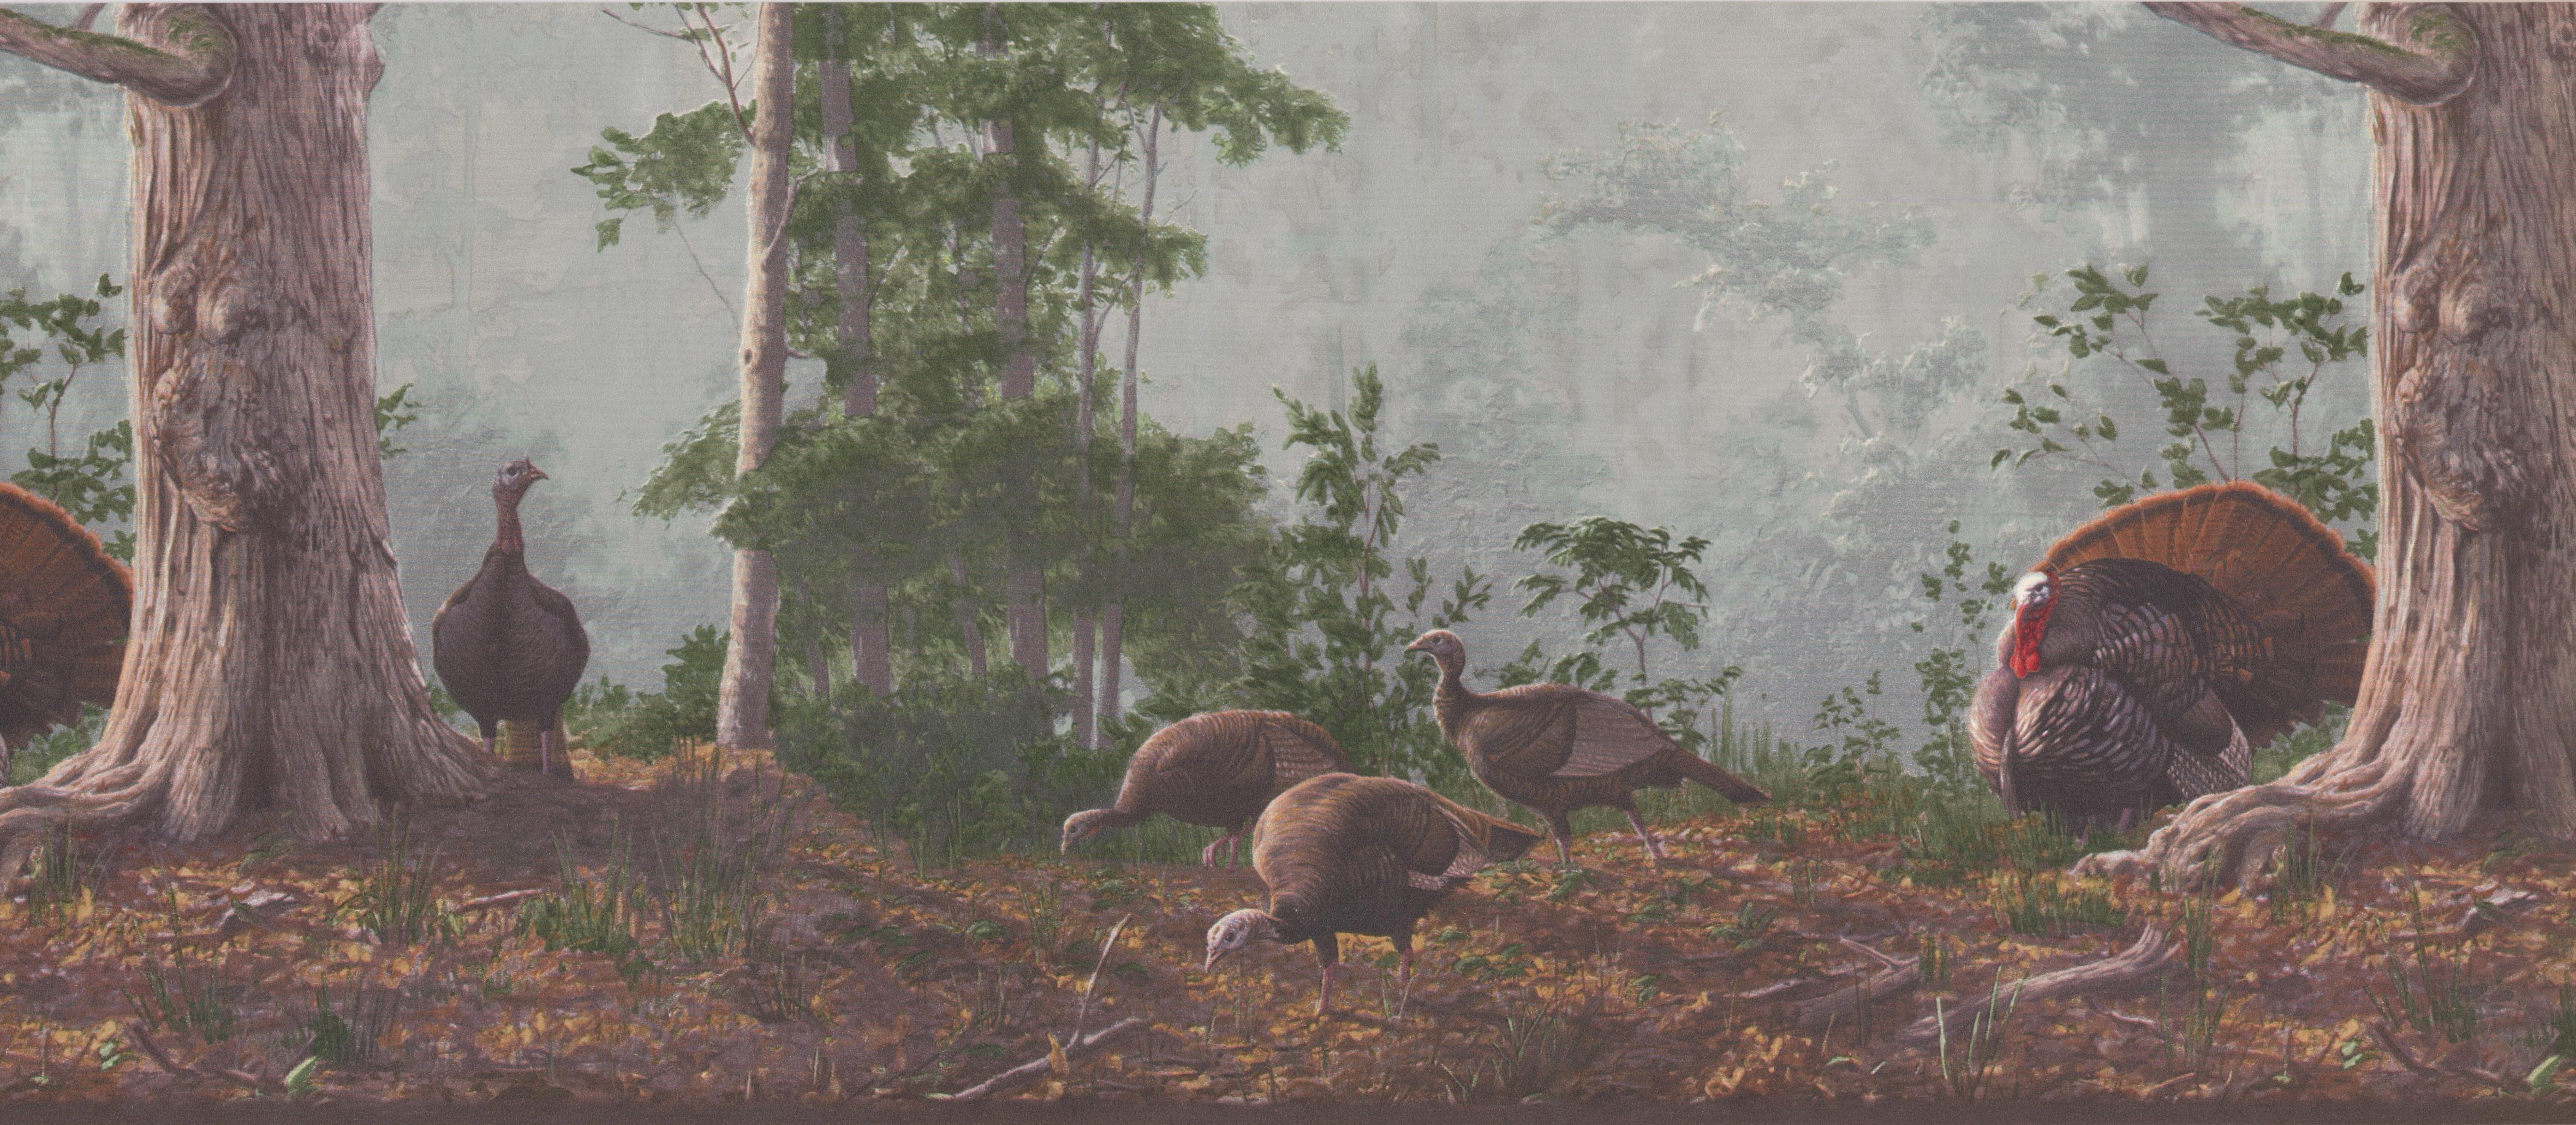 Turkeys in the Forest Brown Green Nature Wide Wallpaper Border Retro Design Roll 15 x 10.5